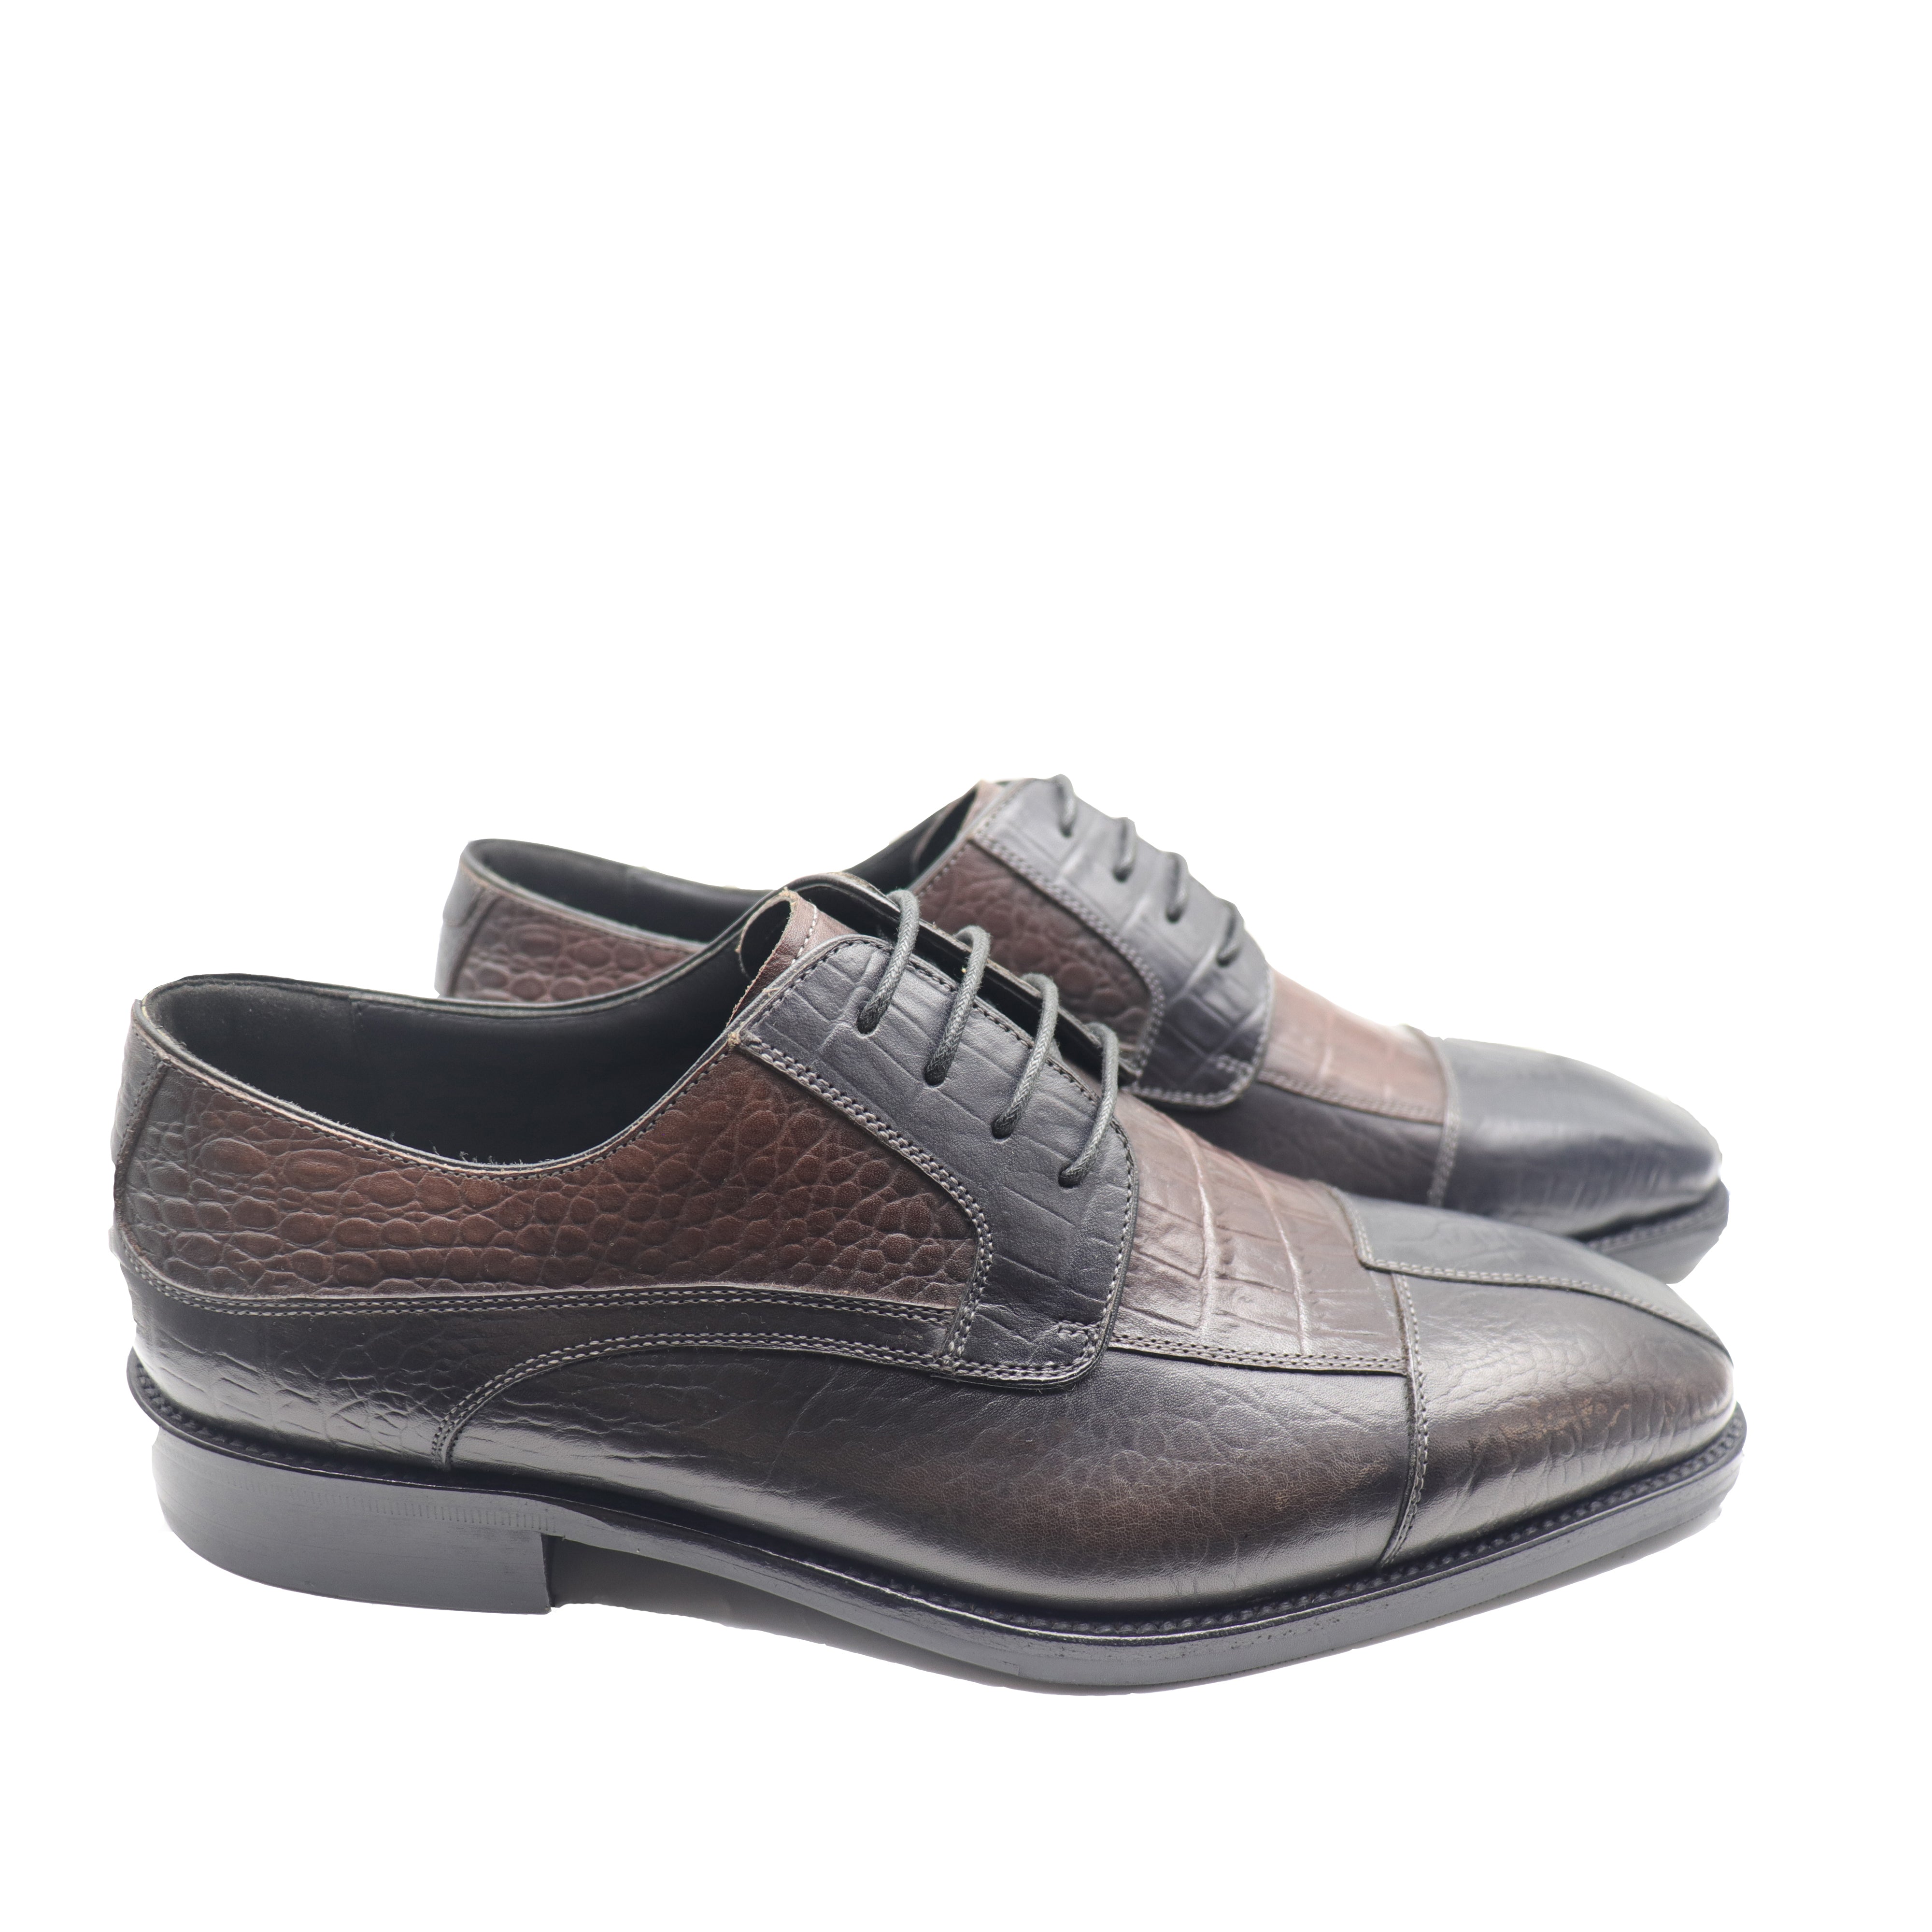 Men's business black brown cowhide shoes